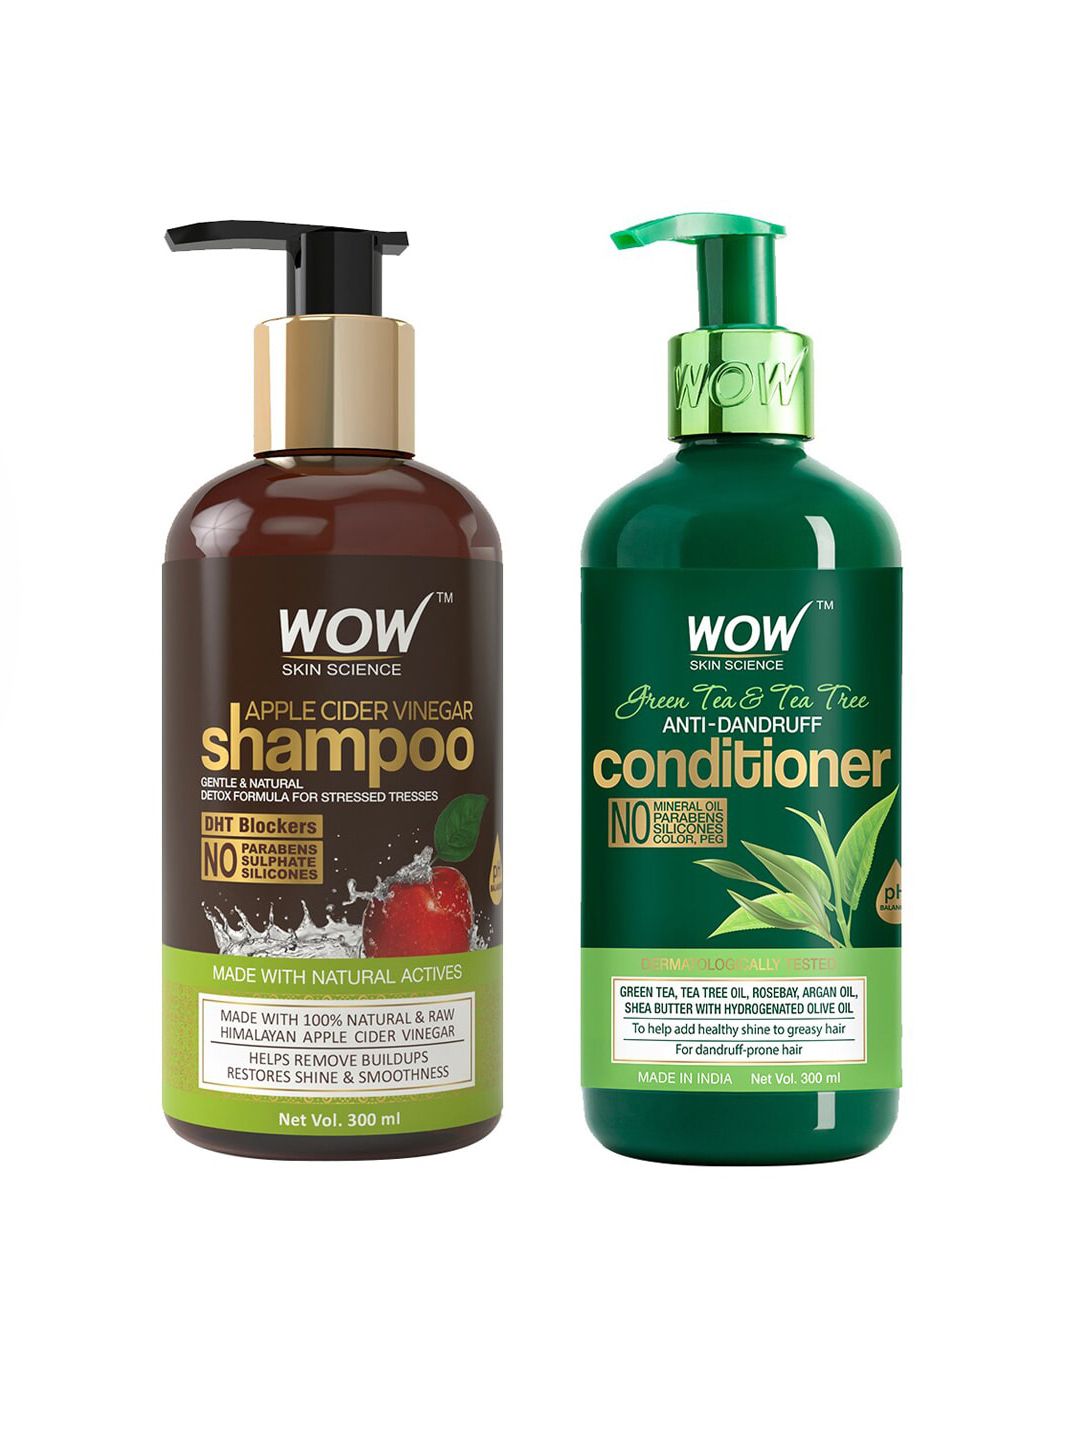 WOW SKIN SCIENCE Unisex Set of ACV Shampoo & Aloe Vera Conditioner - 600 ml Price in India